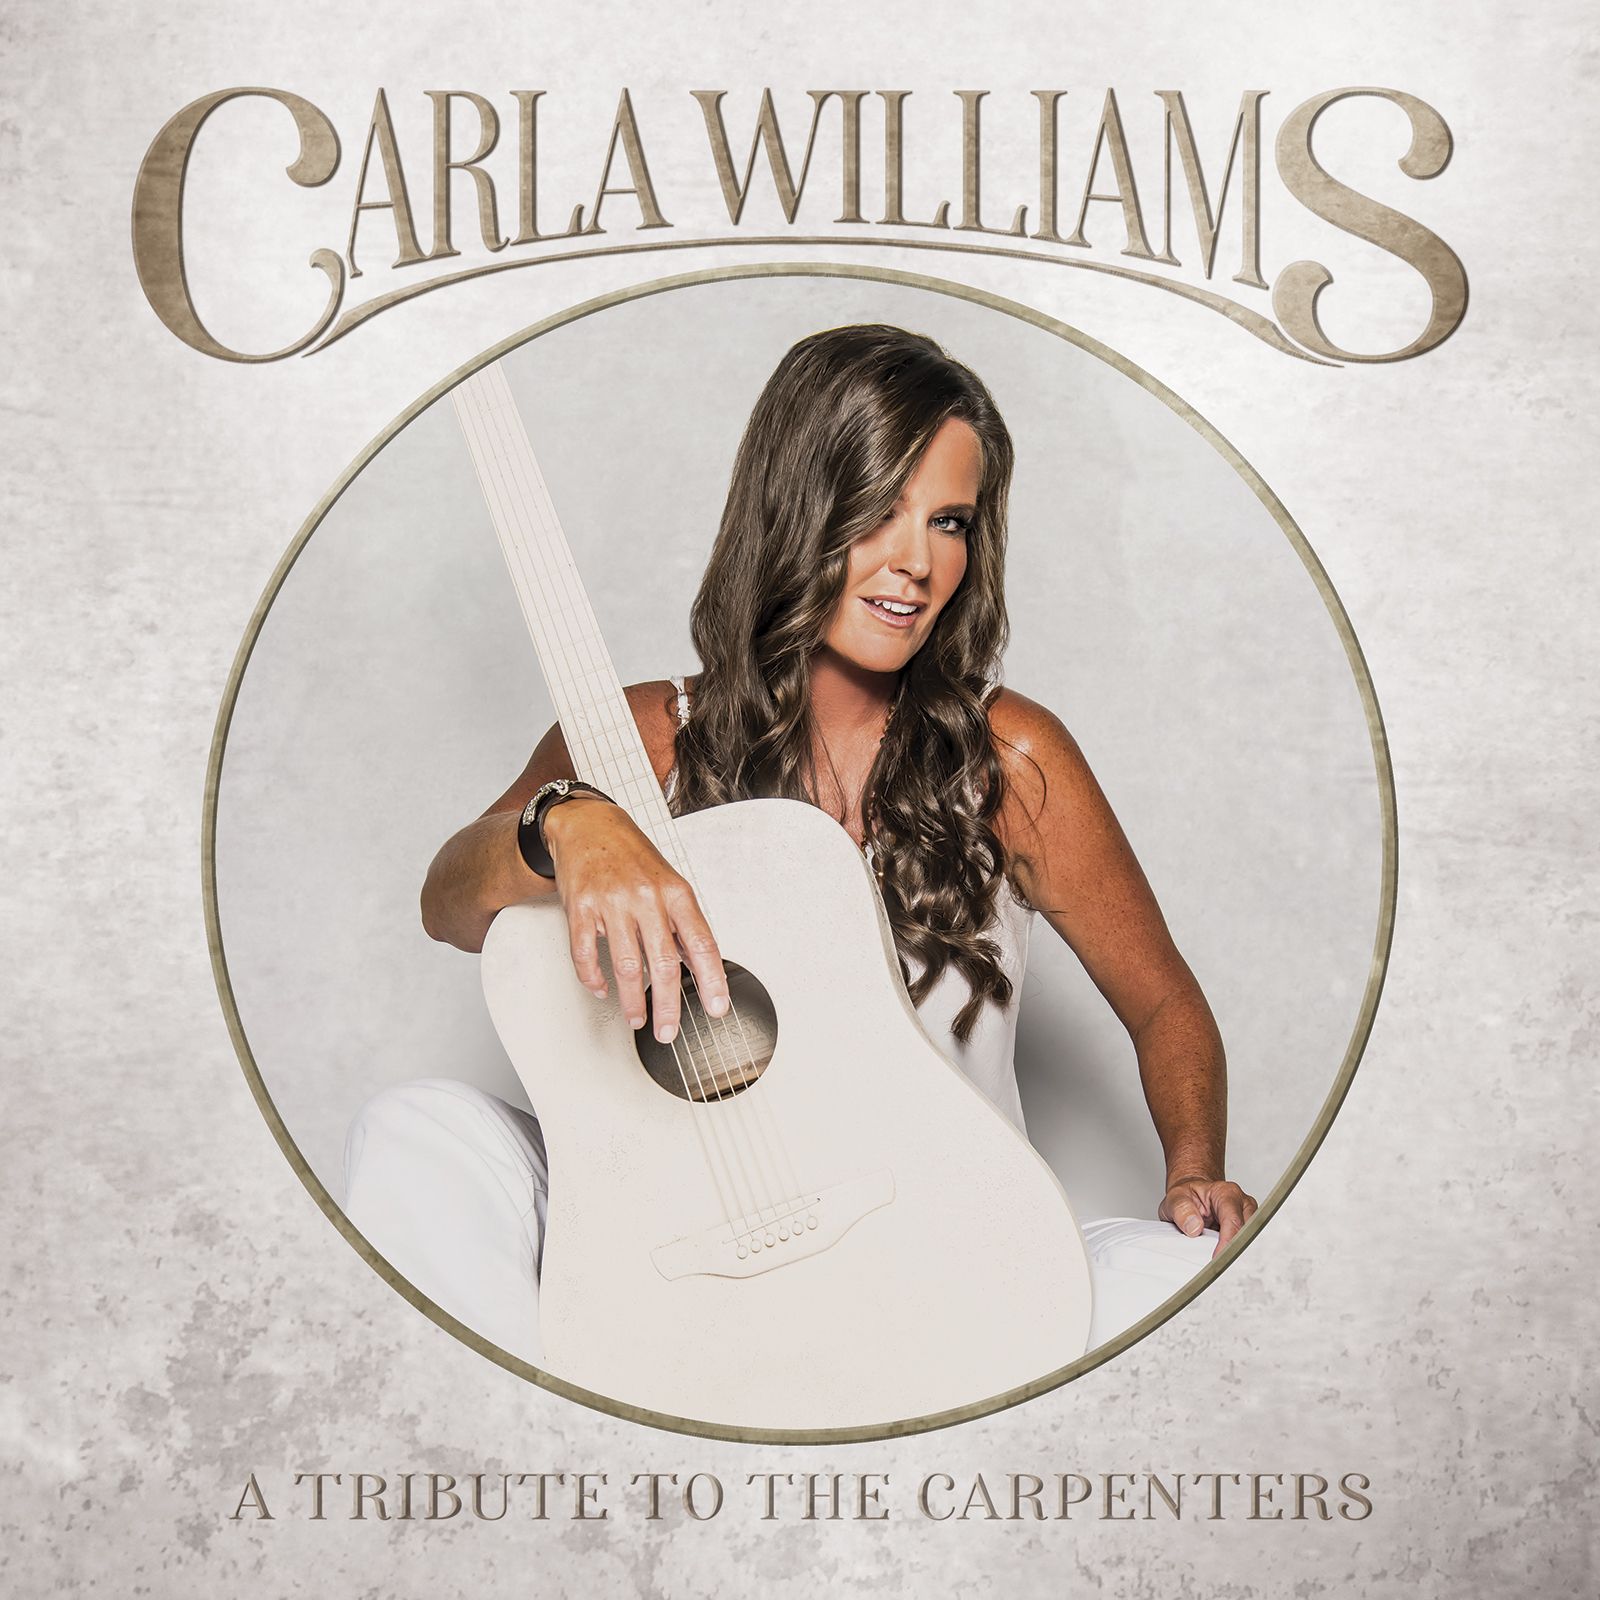 Carla Williams - A Tribute to the Carpenters